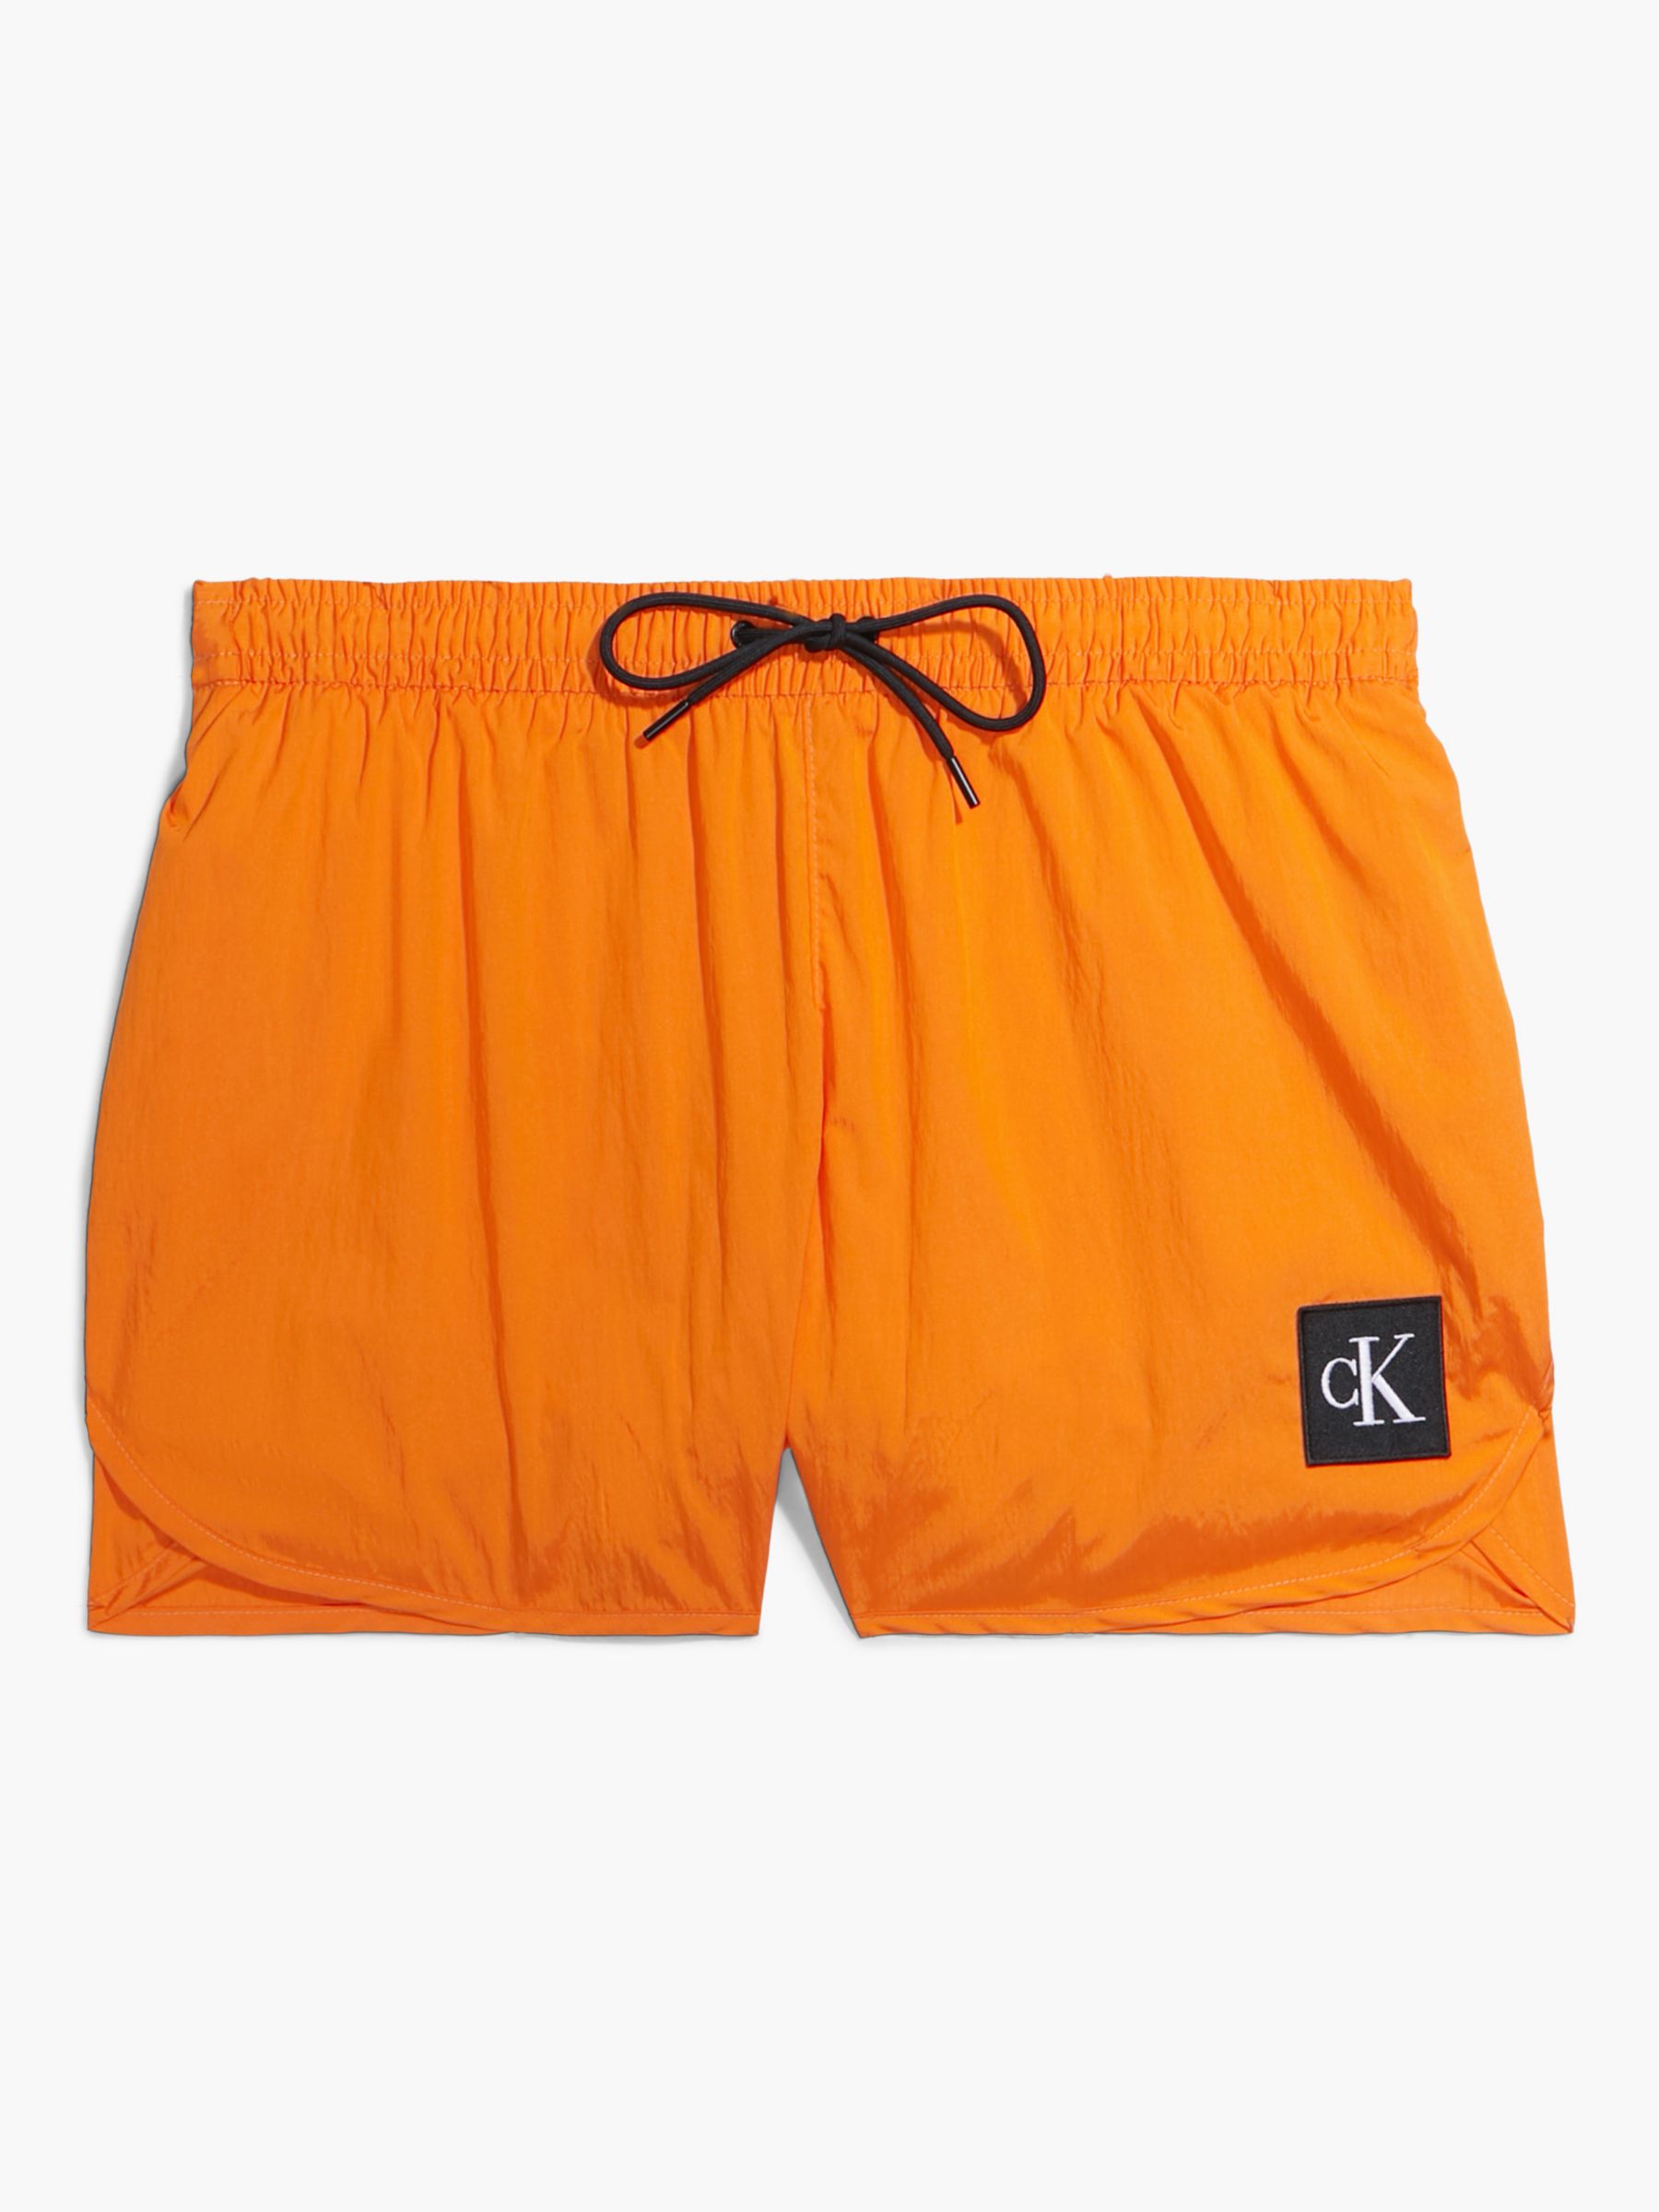 Calvin Klein Runners Swim Shorts, Sun Kissed Orange, S